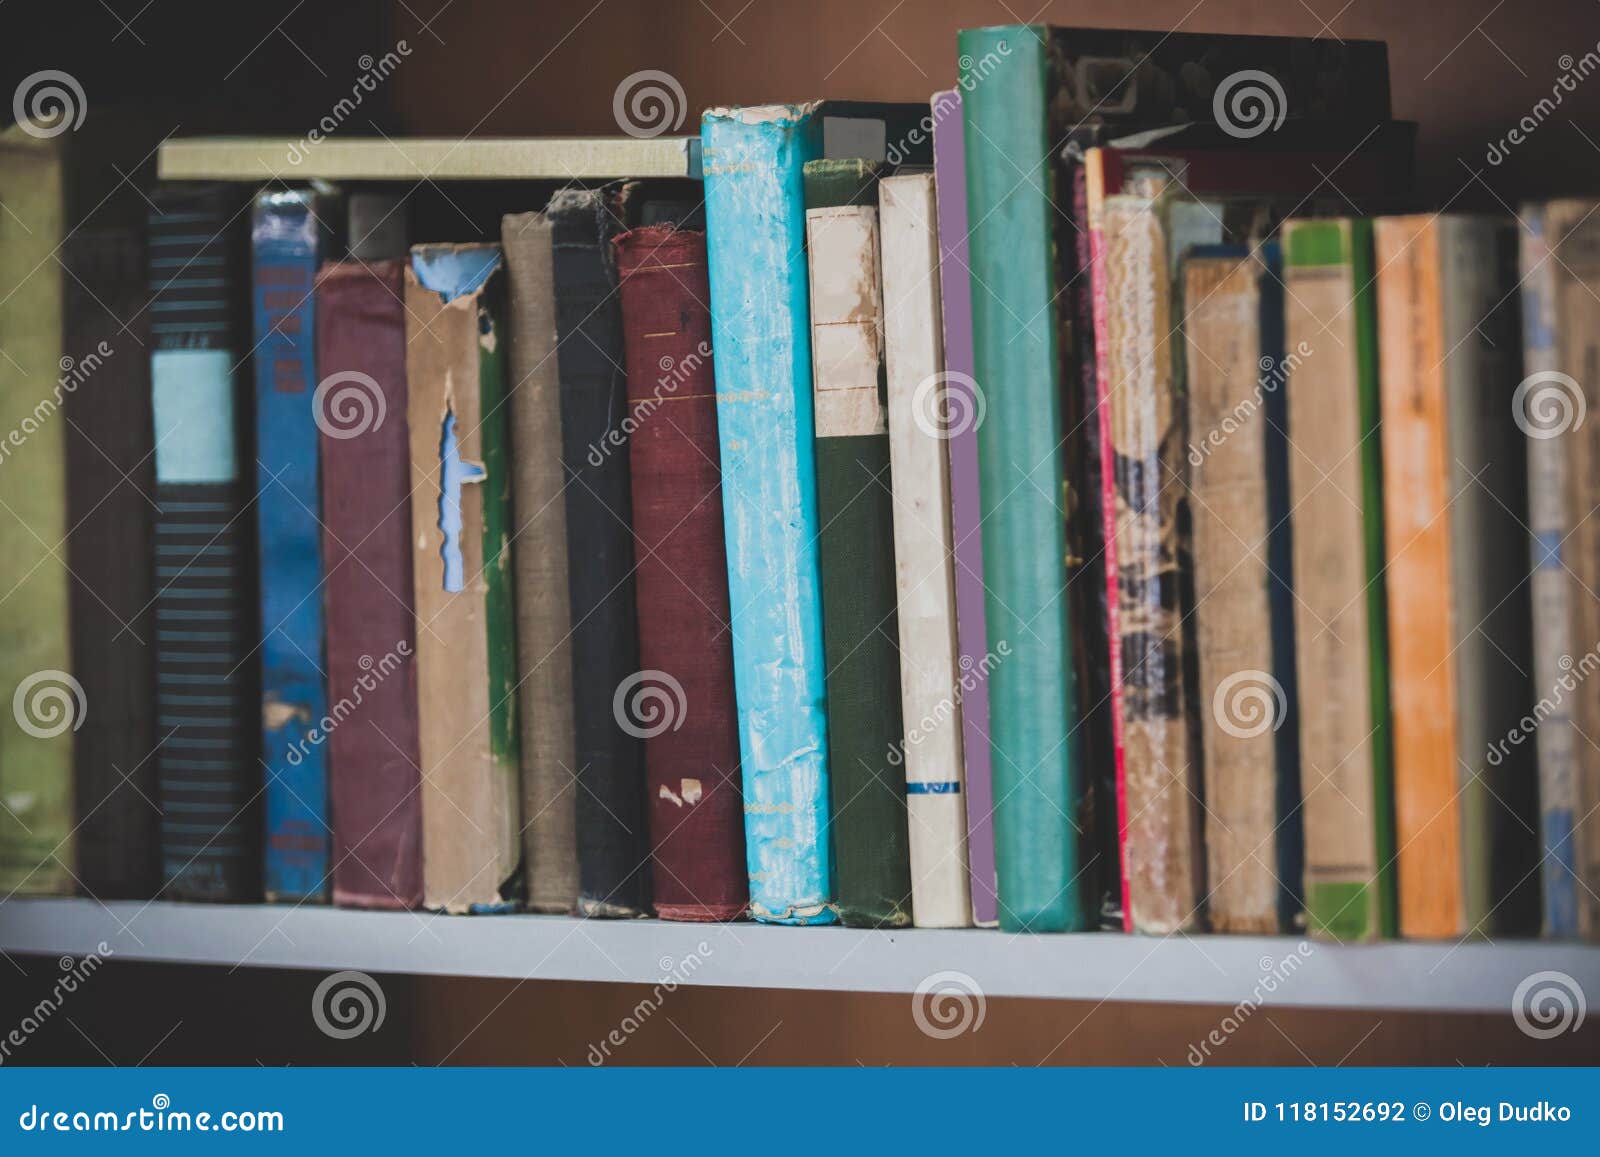 Books On The Shelf Stock Photo Image Of Literature 118152692